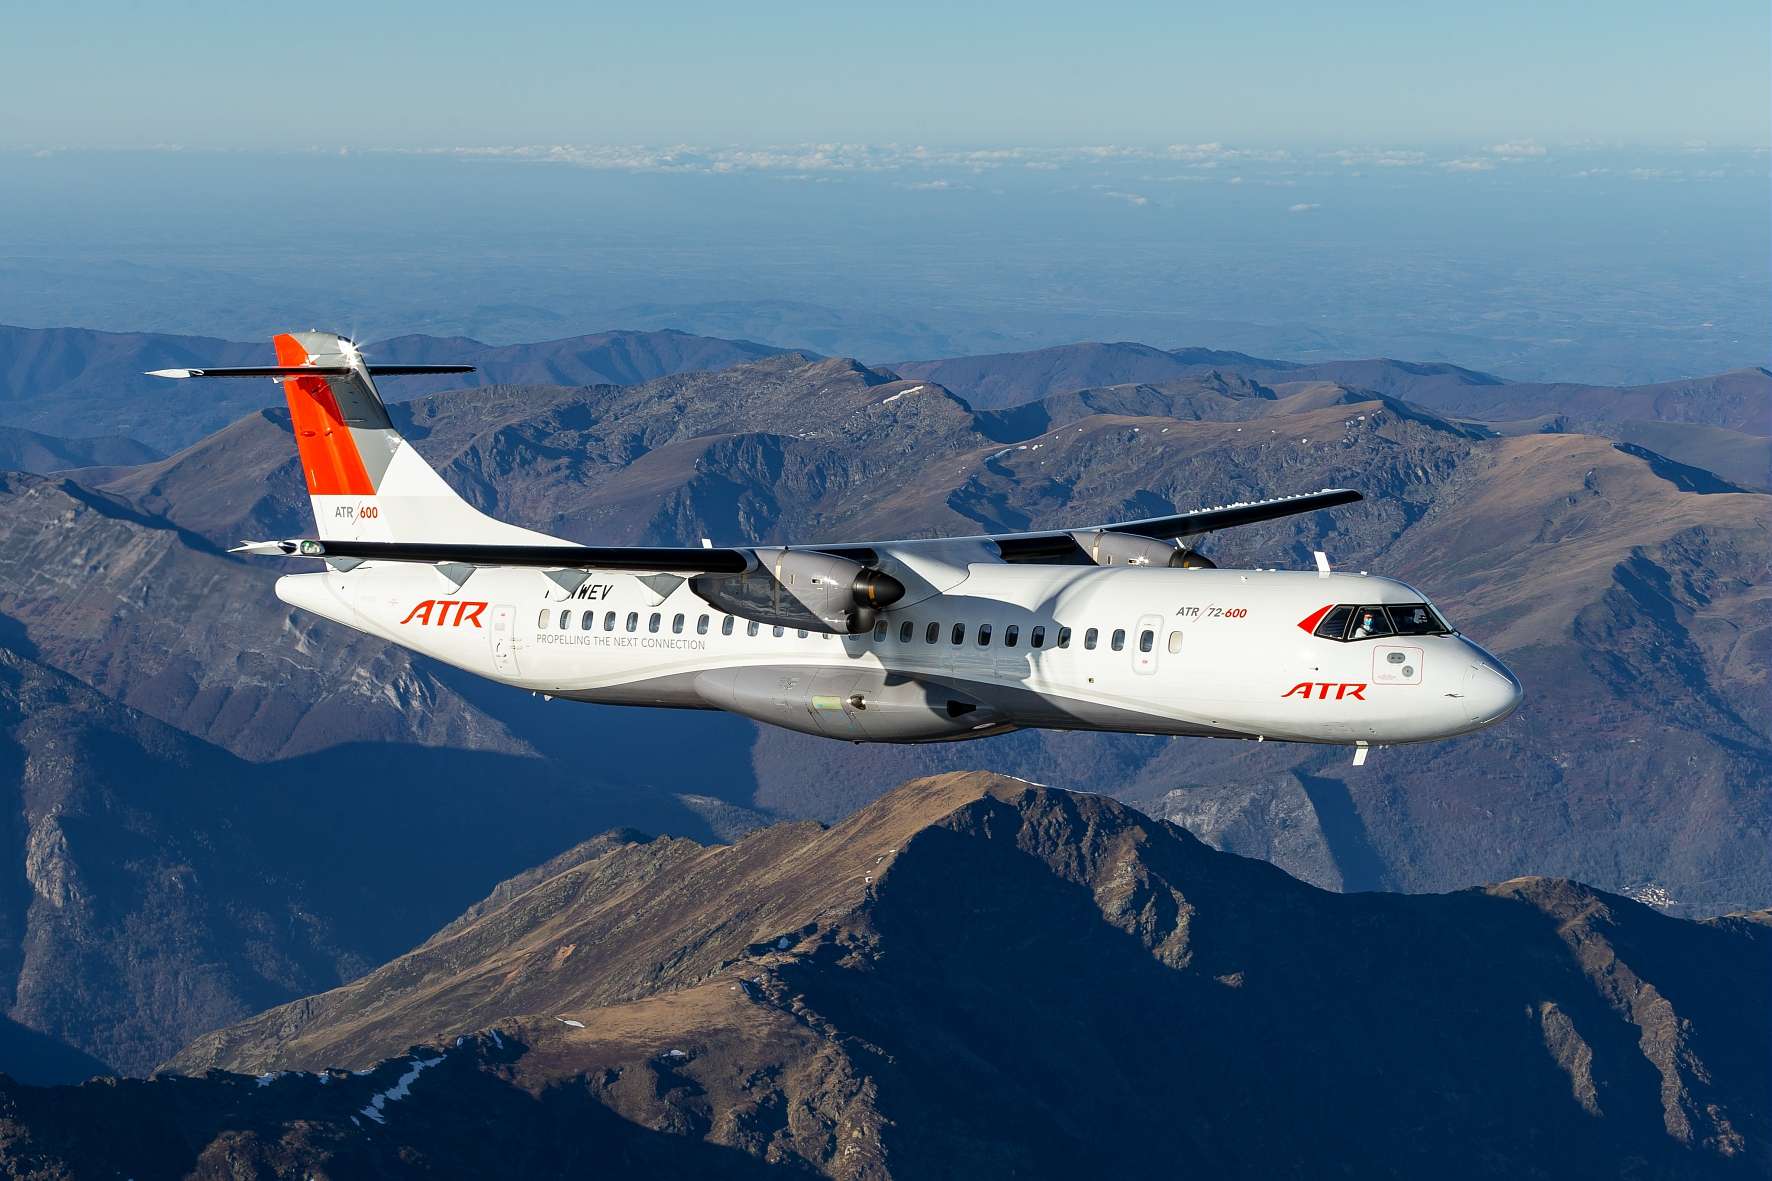 Dubai Airshow Overall Recap: ATR Continues Steady Success